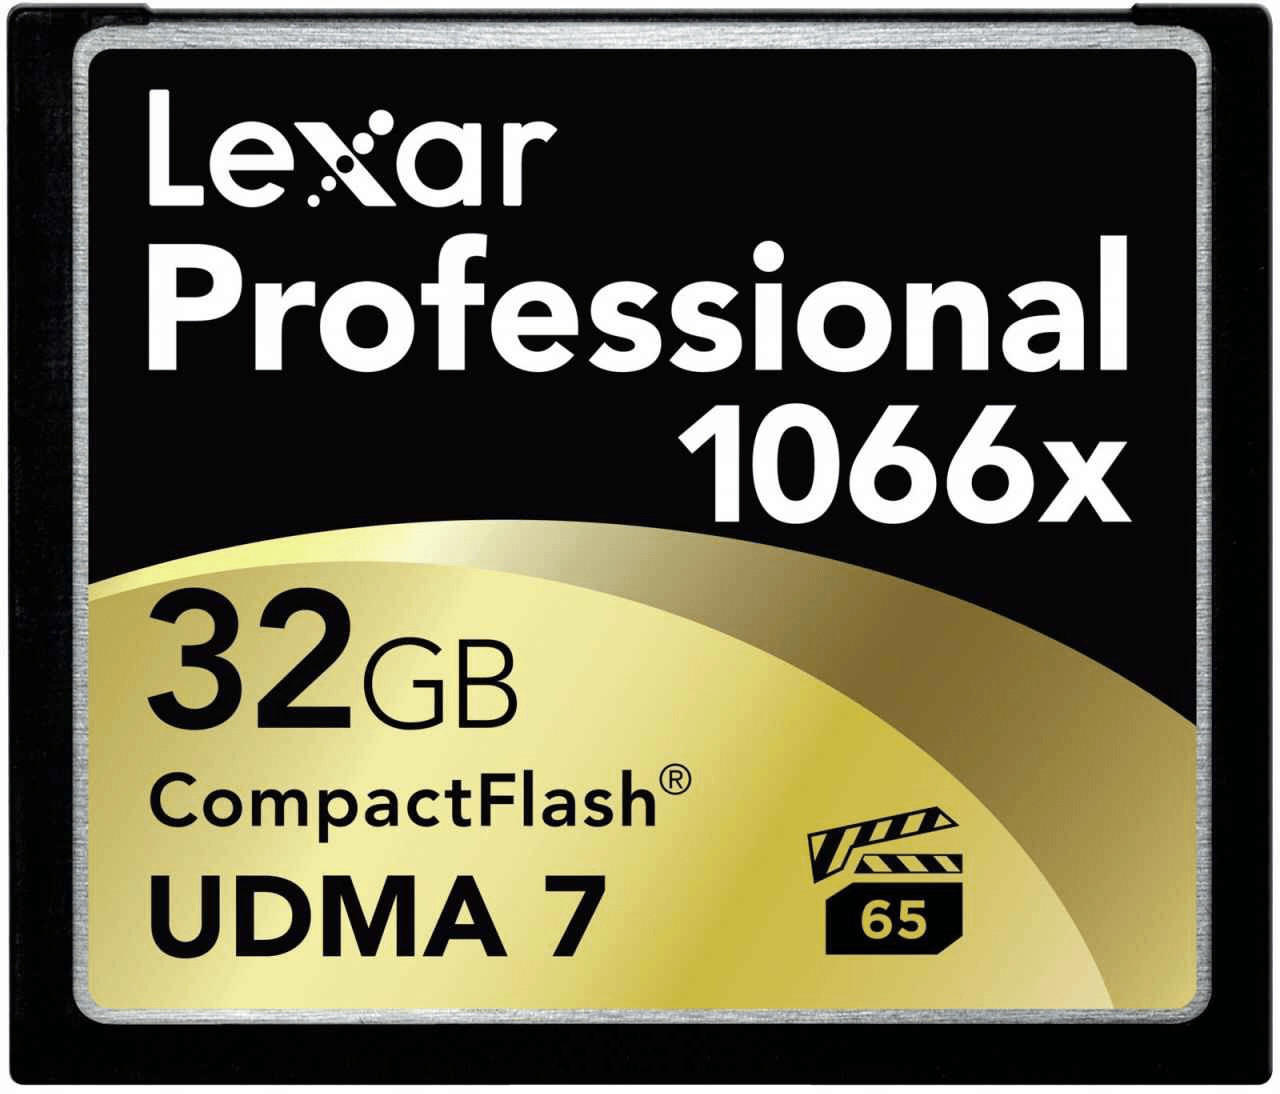 Lexar Professional 1066x Compact Flash 32GB (LCF32GCRBEU1066)